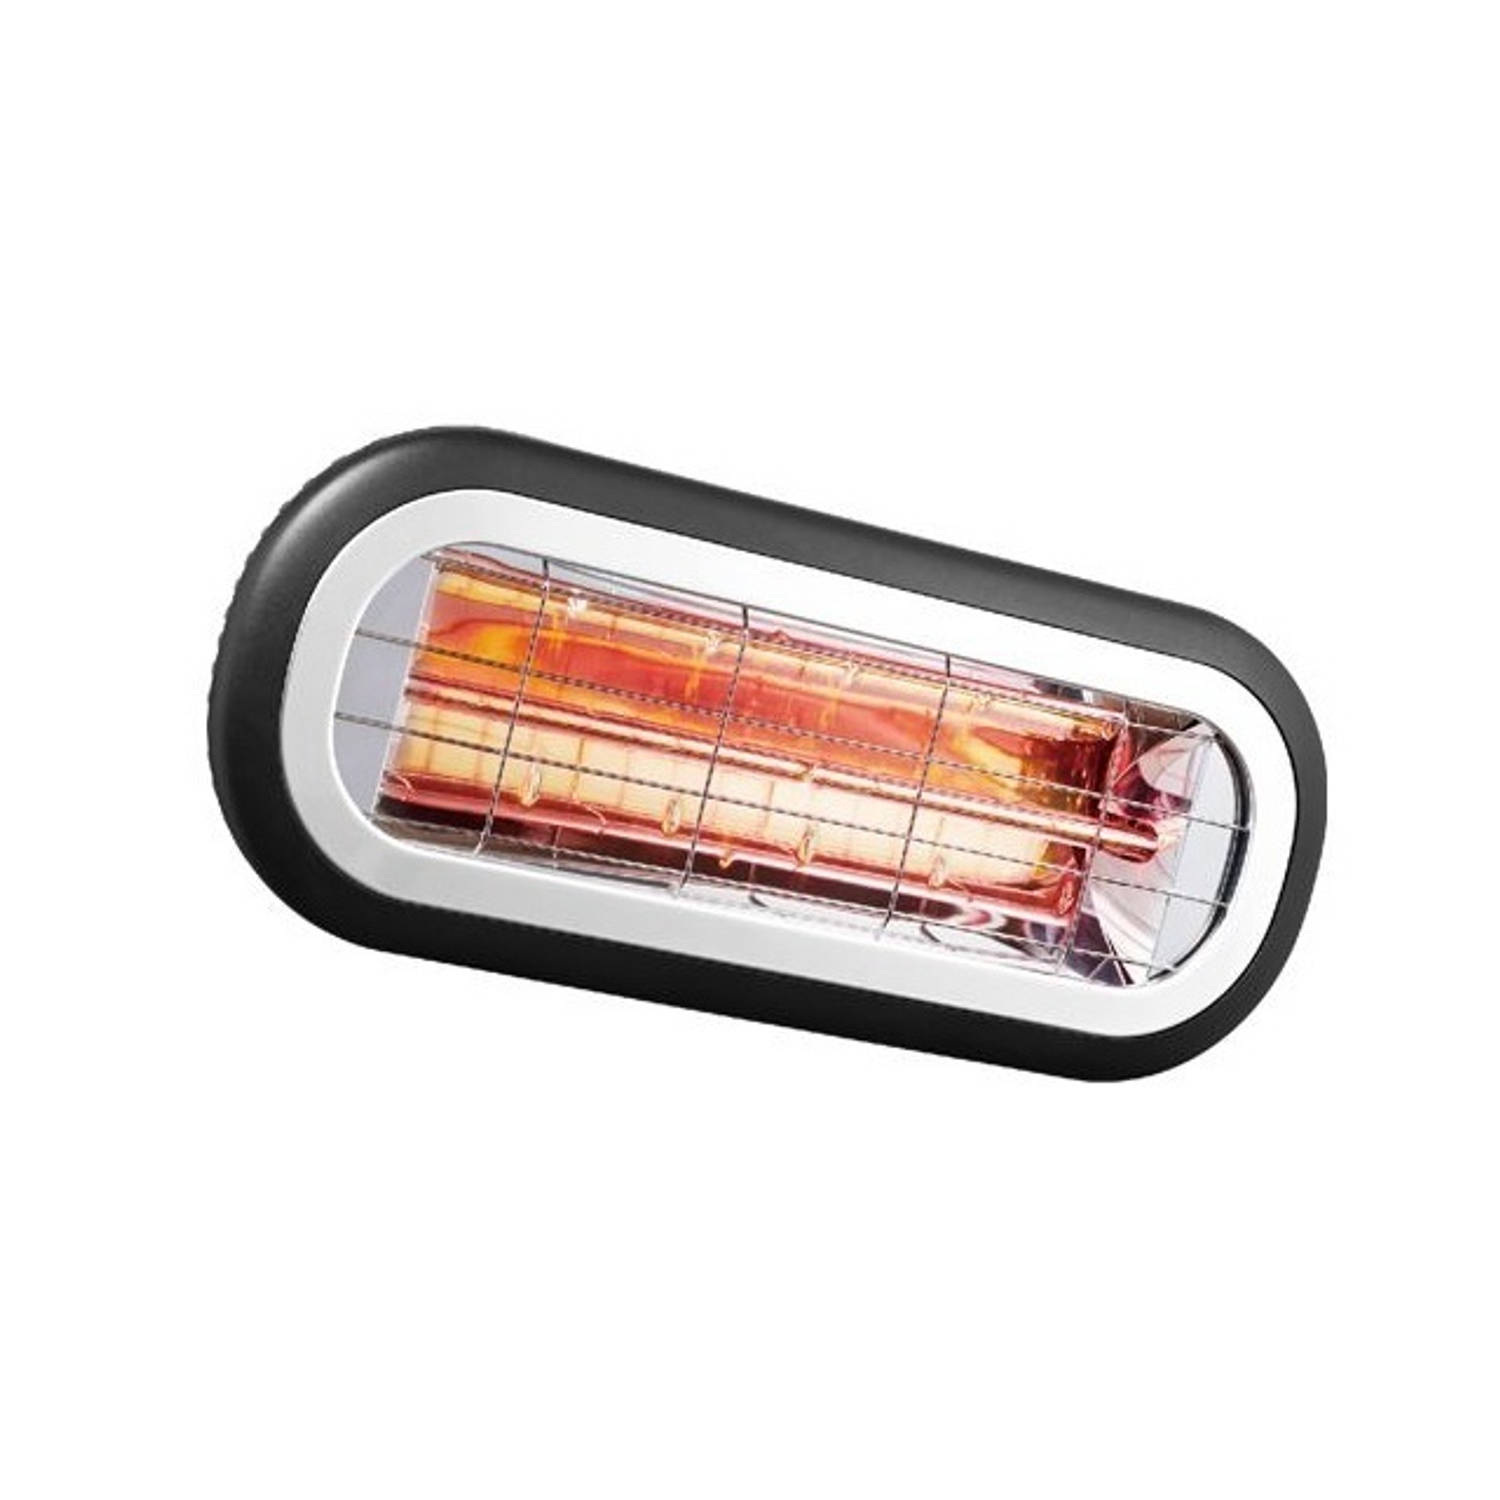 Kemper Soleado Elektrik Elektrische Heater Terrasverwarmer Ophangbaar Ip65